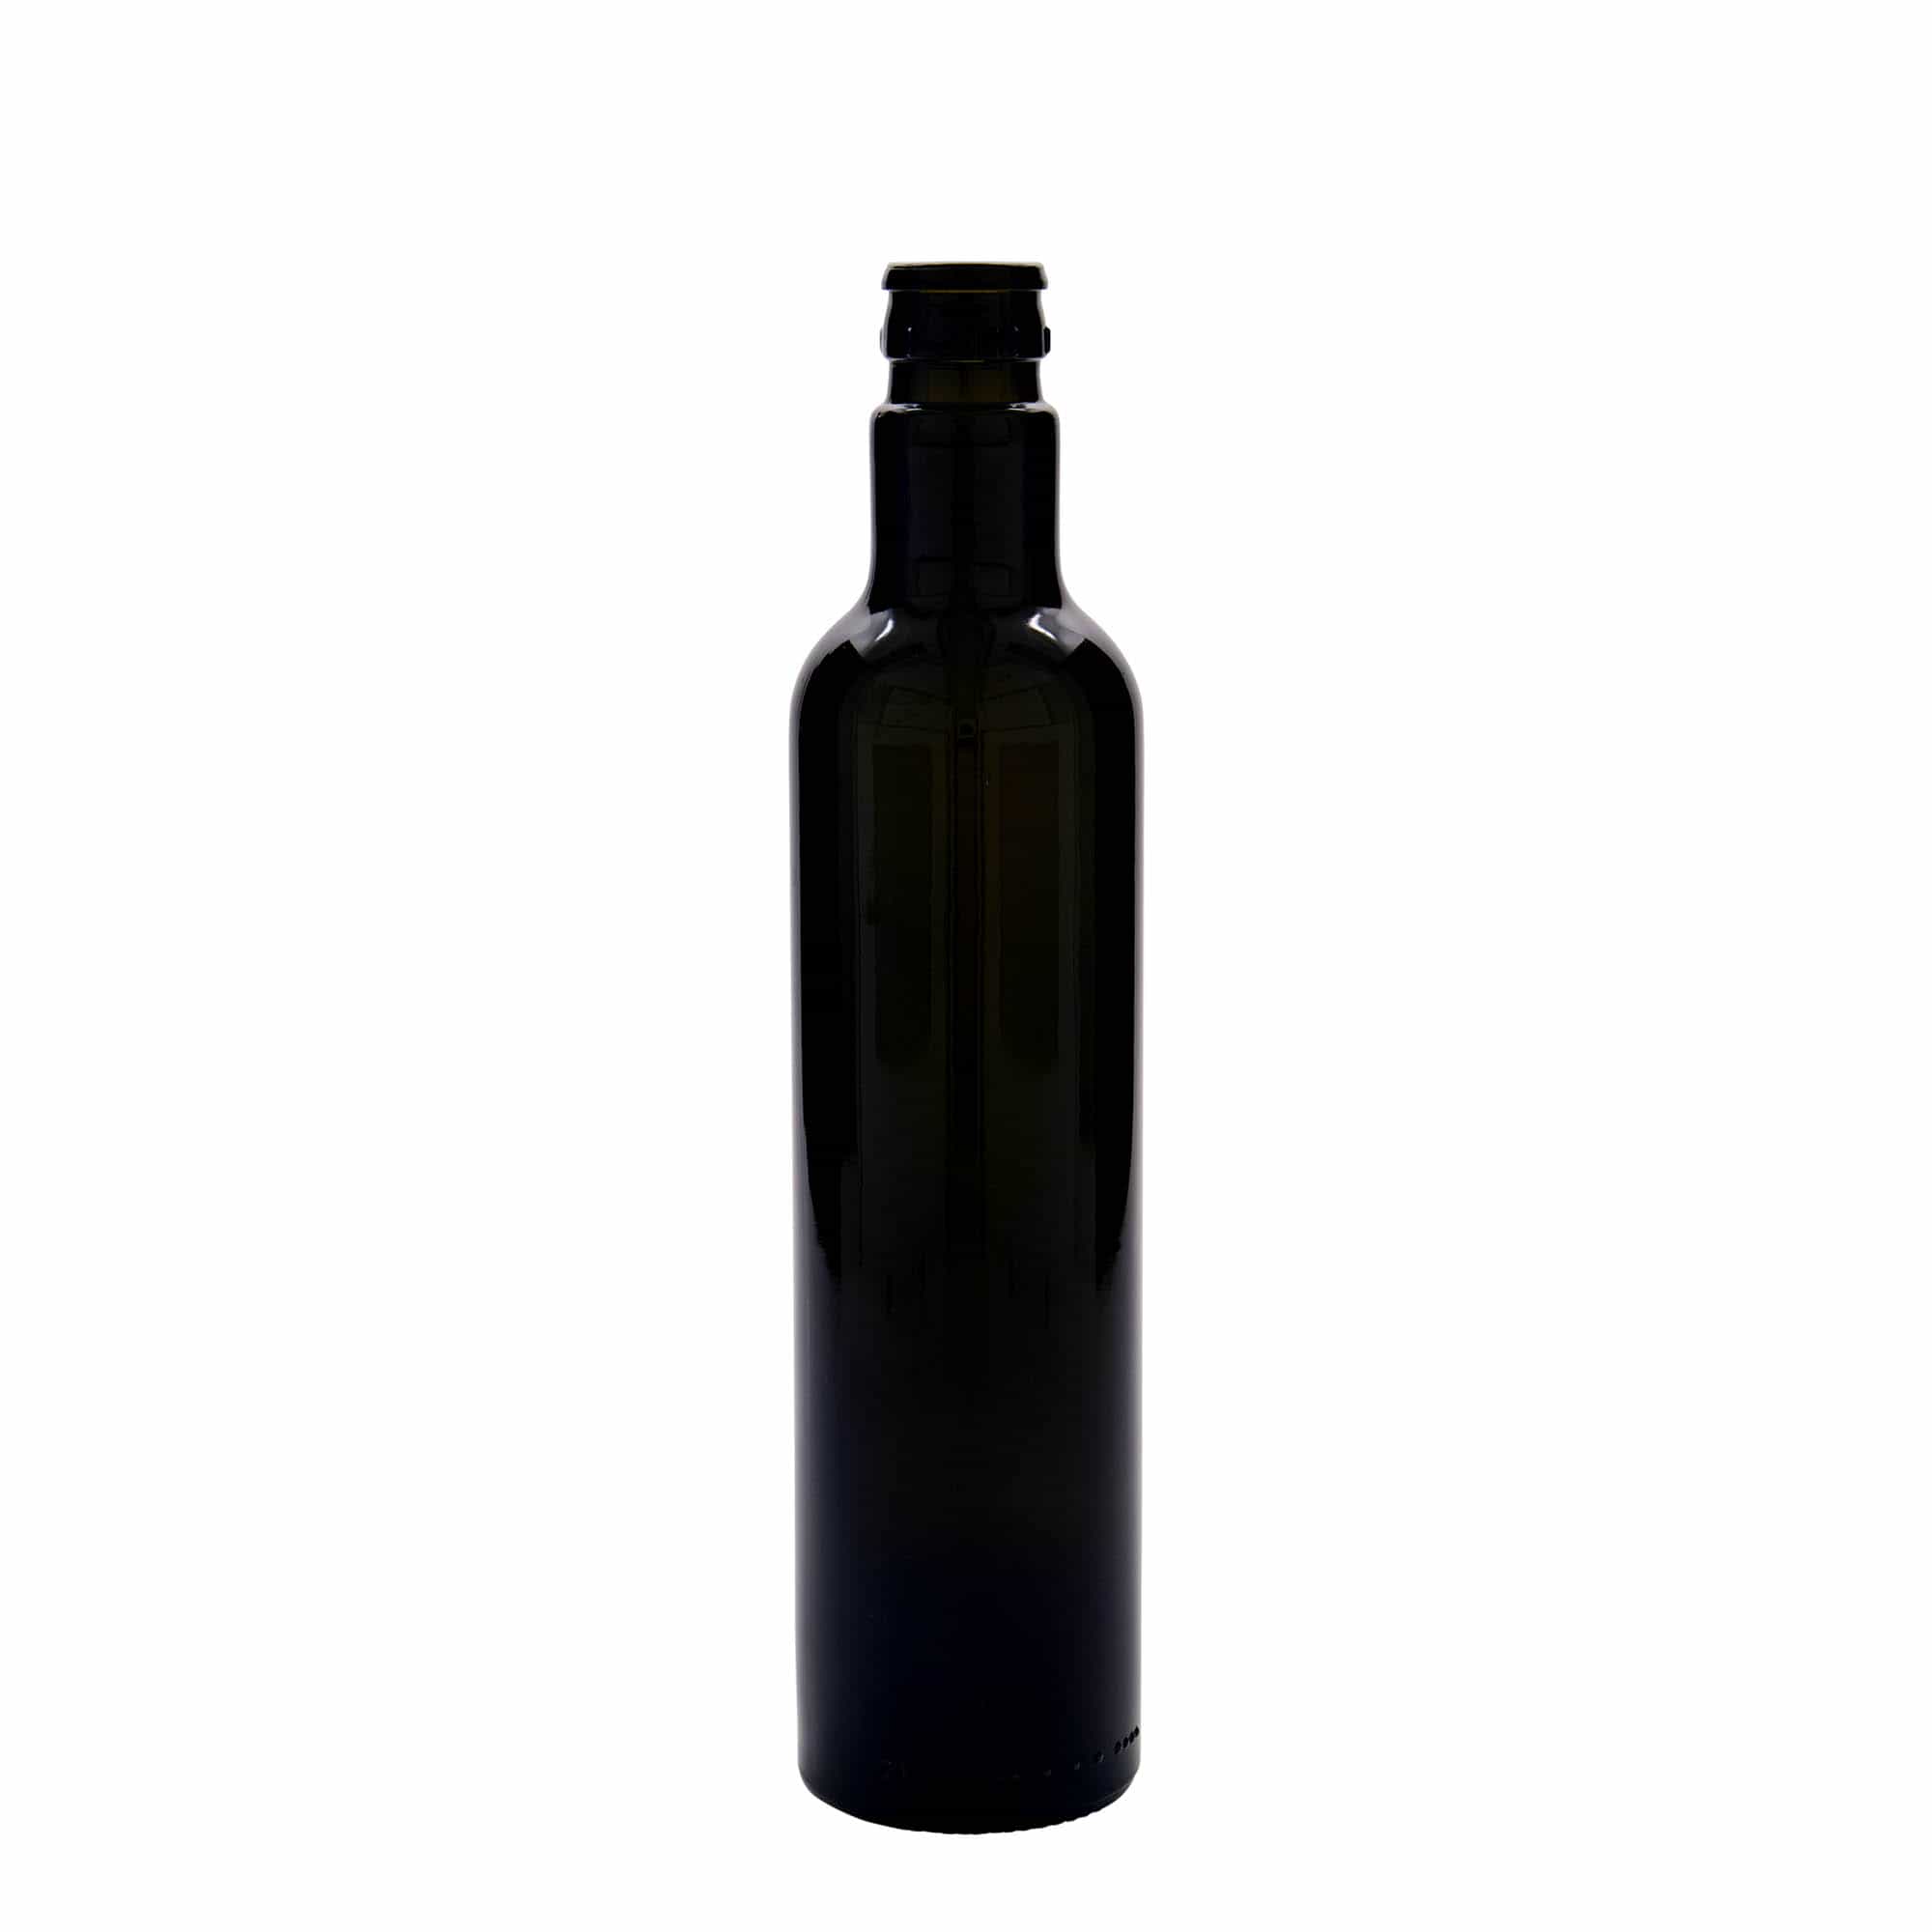 Botella Vidrio 500 ml Leifheit - Tienda Pepino